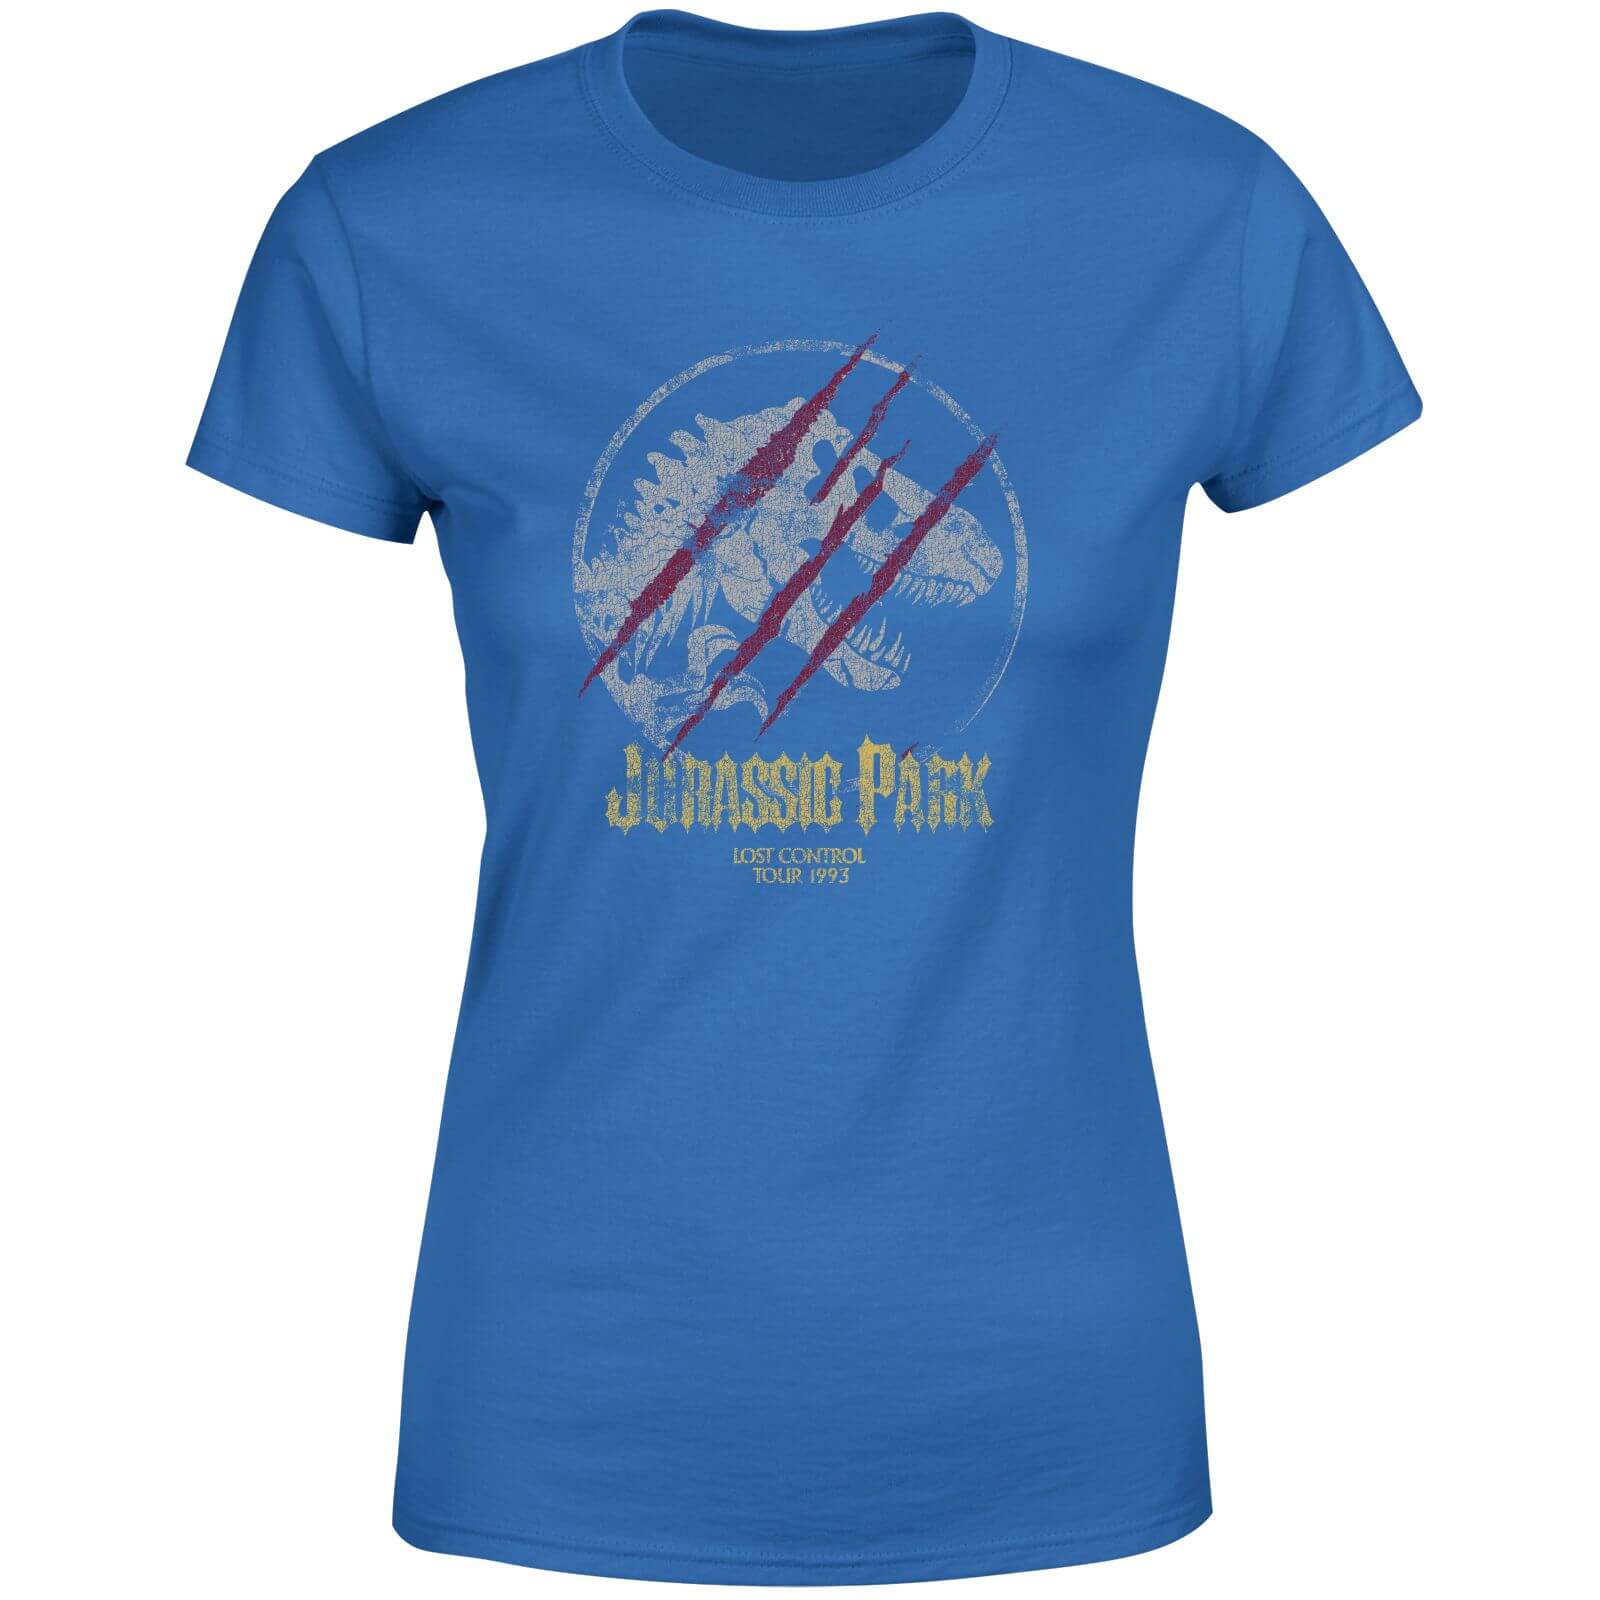 Jurassic Park Lost Control Women's T-Shirt - Blue - S - Blue